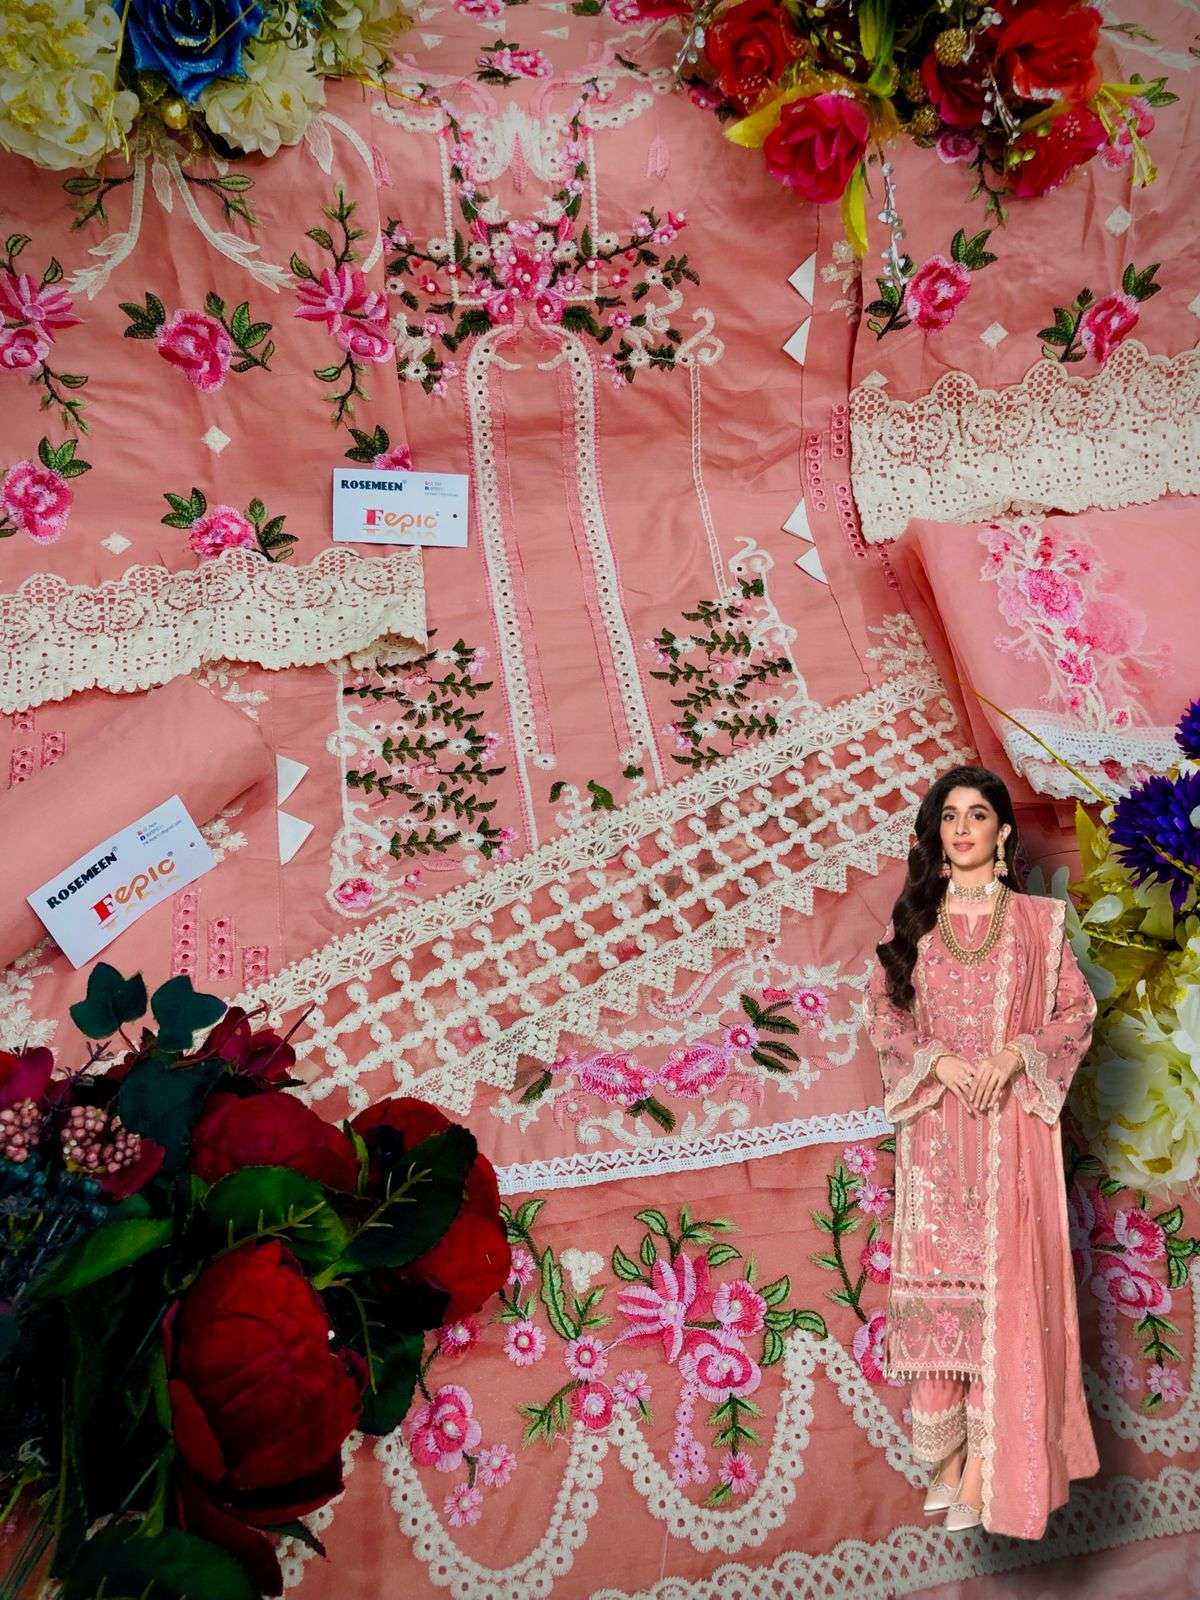 fepic rosemeen elaf nx pakistani cotton fabric salwar kameez wholesale supplier surat 